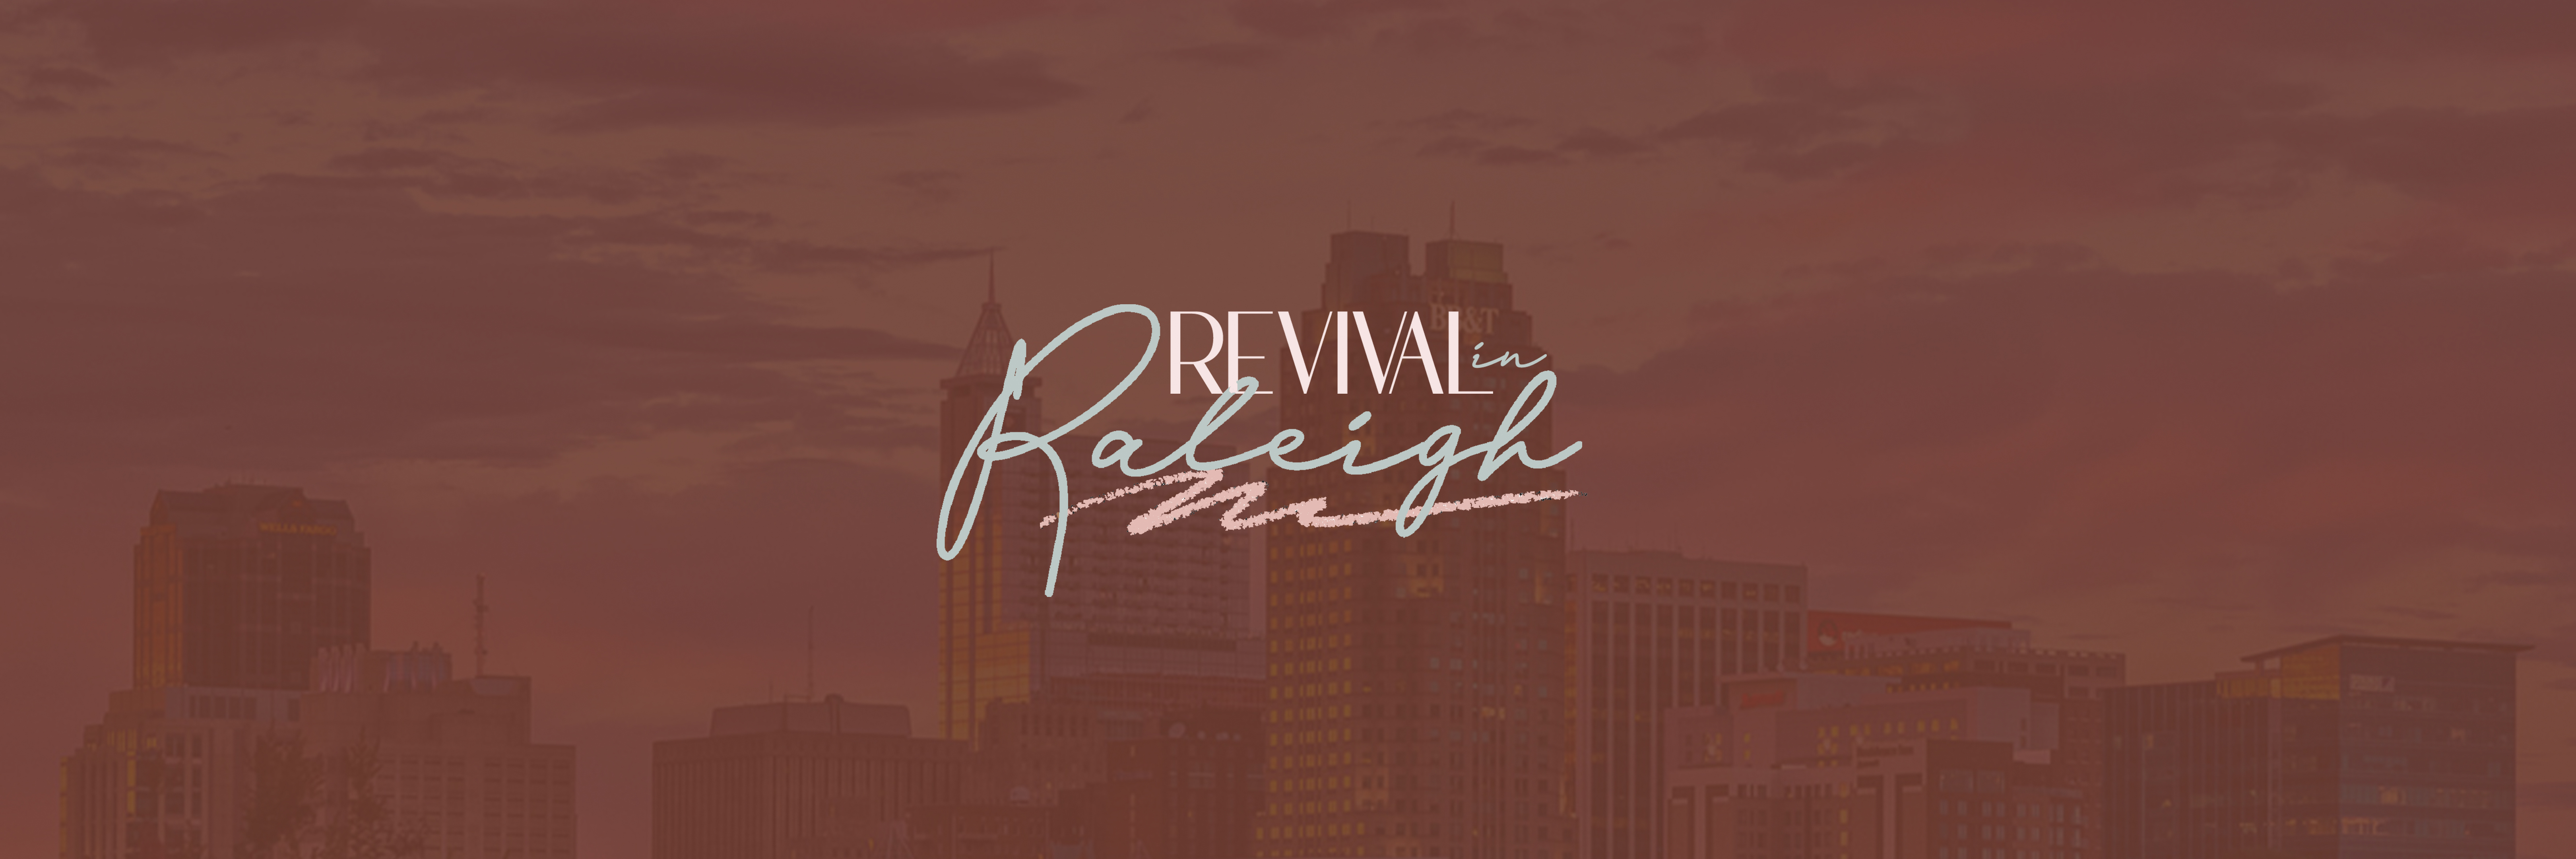 Revival in Raleigh